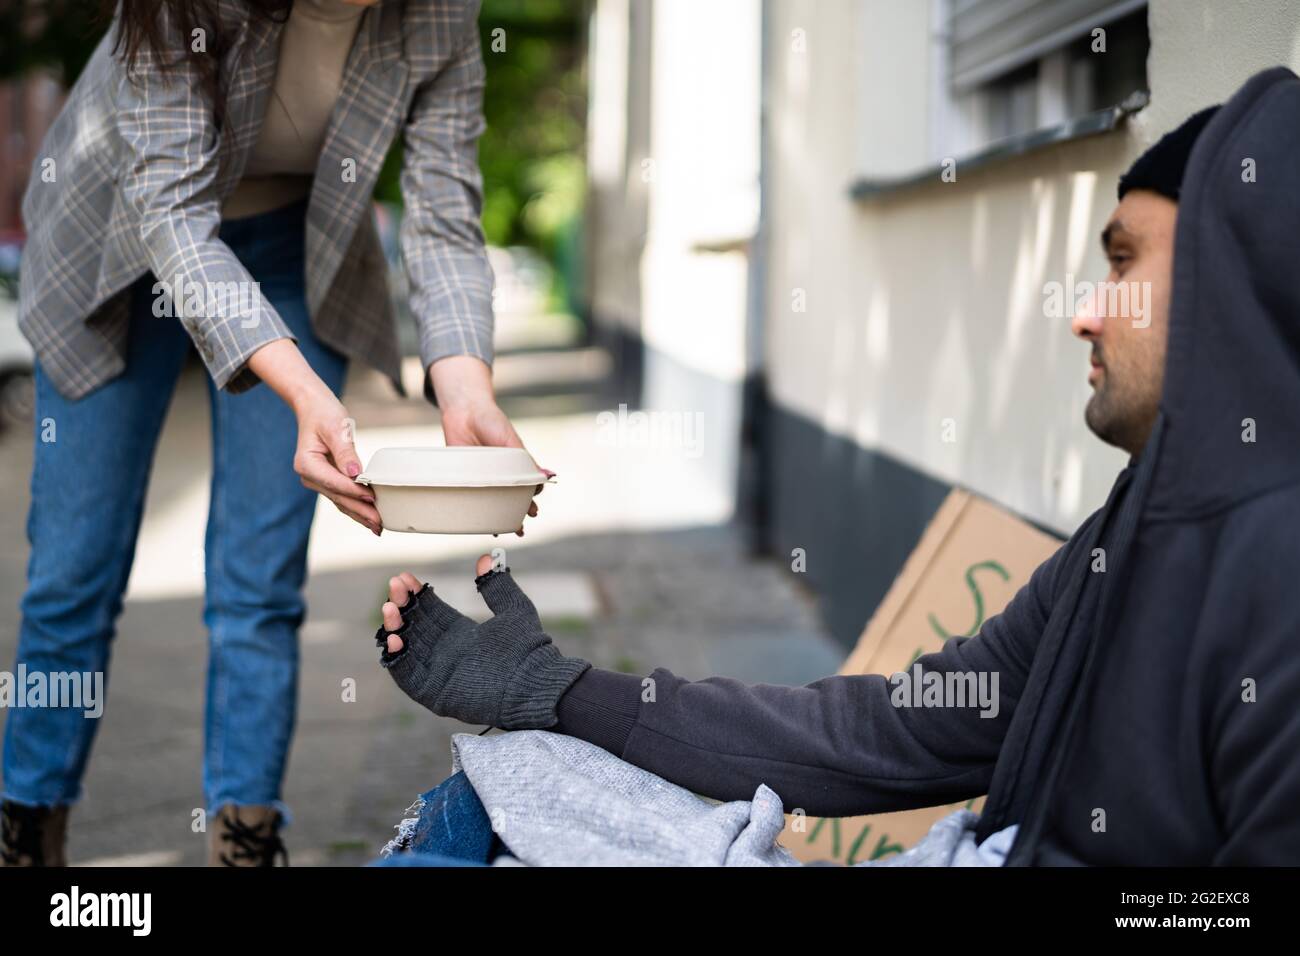 Homeless Food Help. Human Poverty. Poor Man Stock Photo